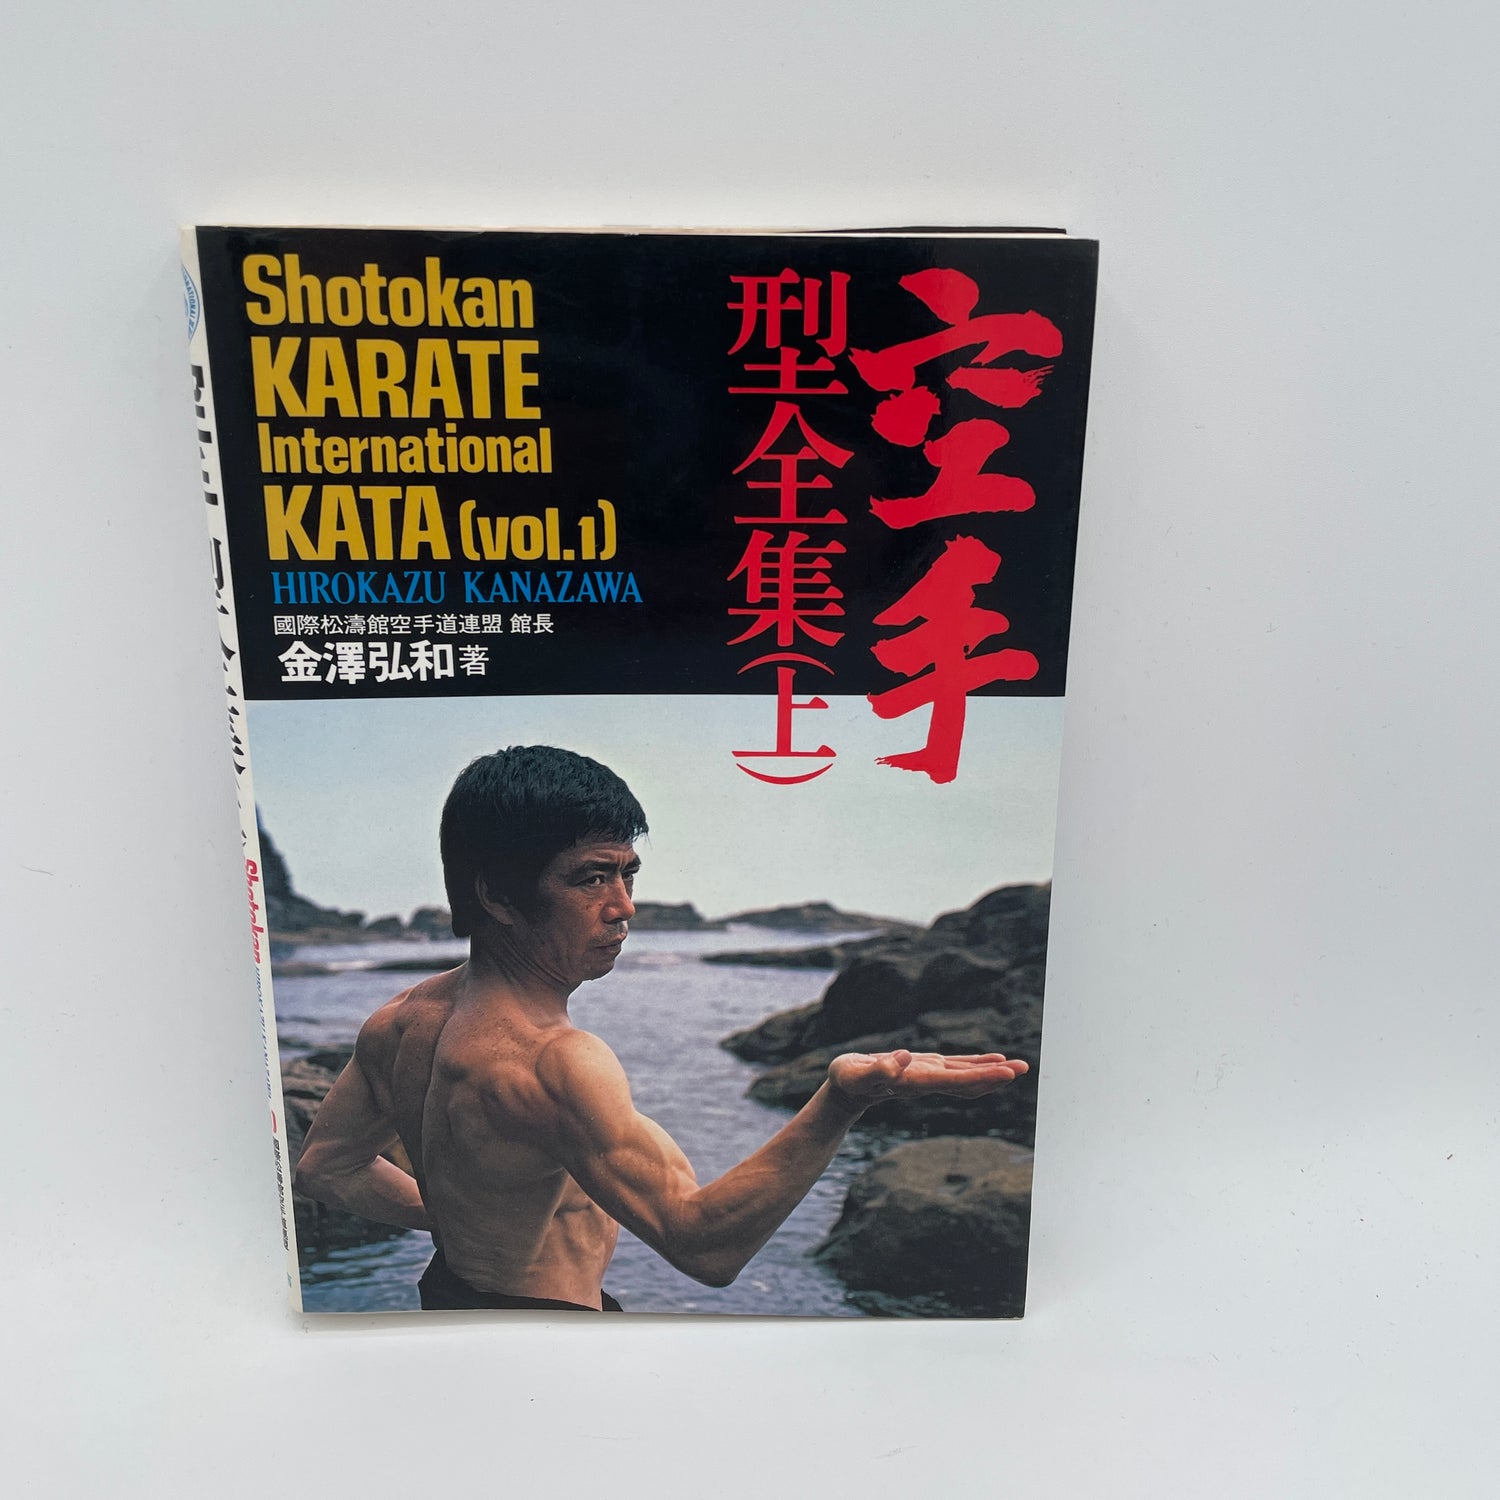 Shotokan Karate International Kata: Volume 1 Book by Hirokazu Kanazawa (Preowned)